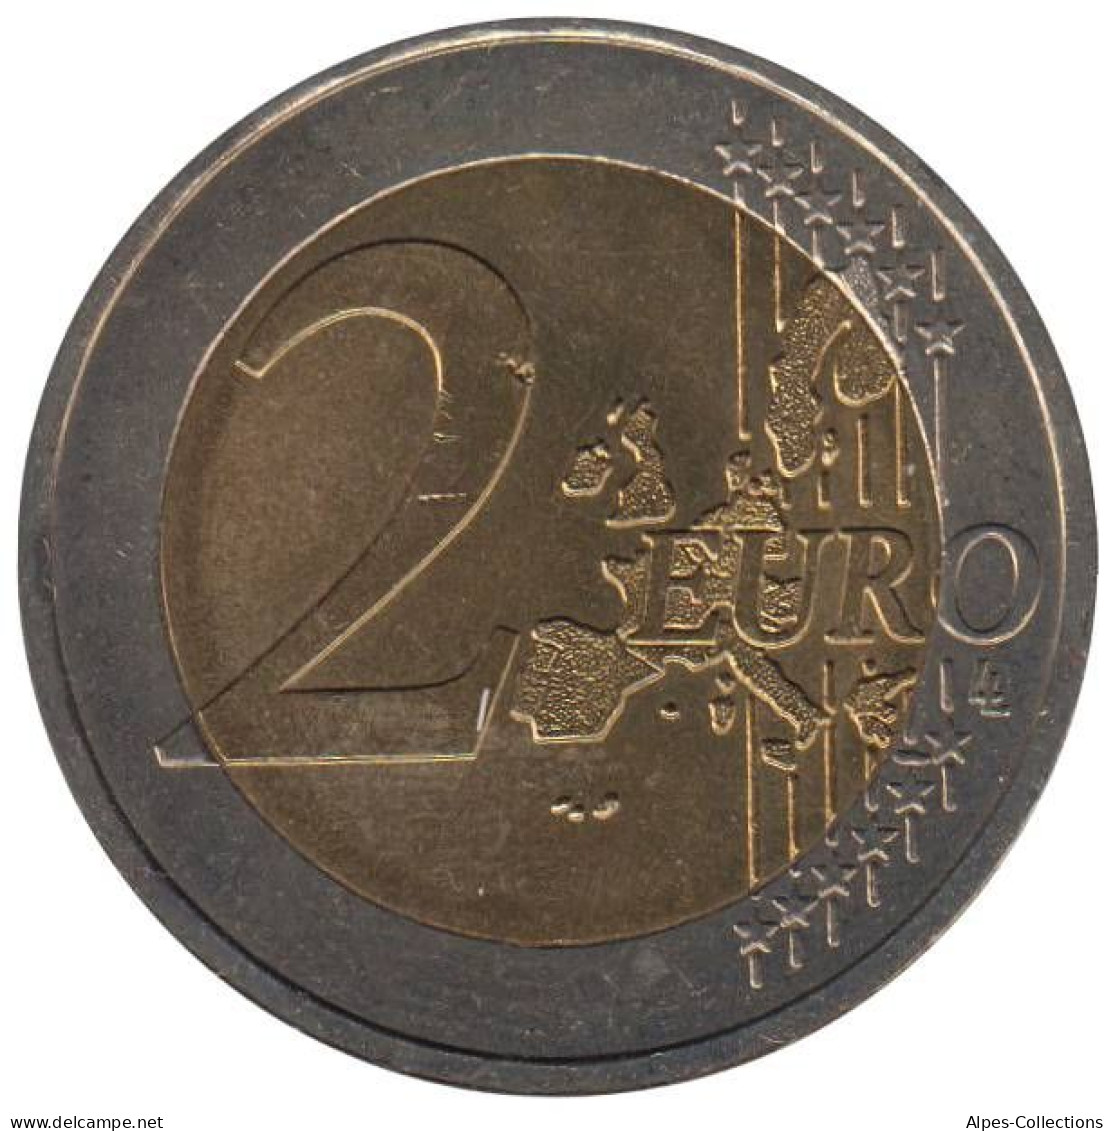 FR20099.1 - FRANCE - 2 Euros - 1999 - France